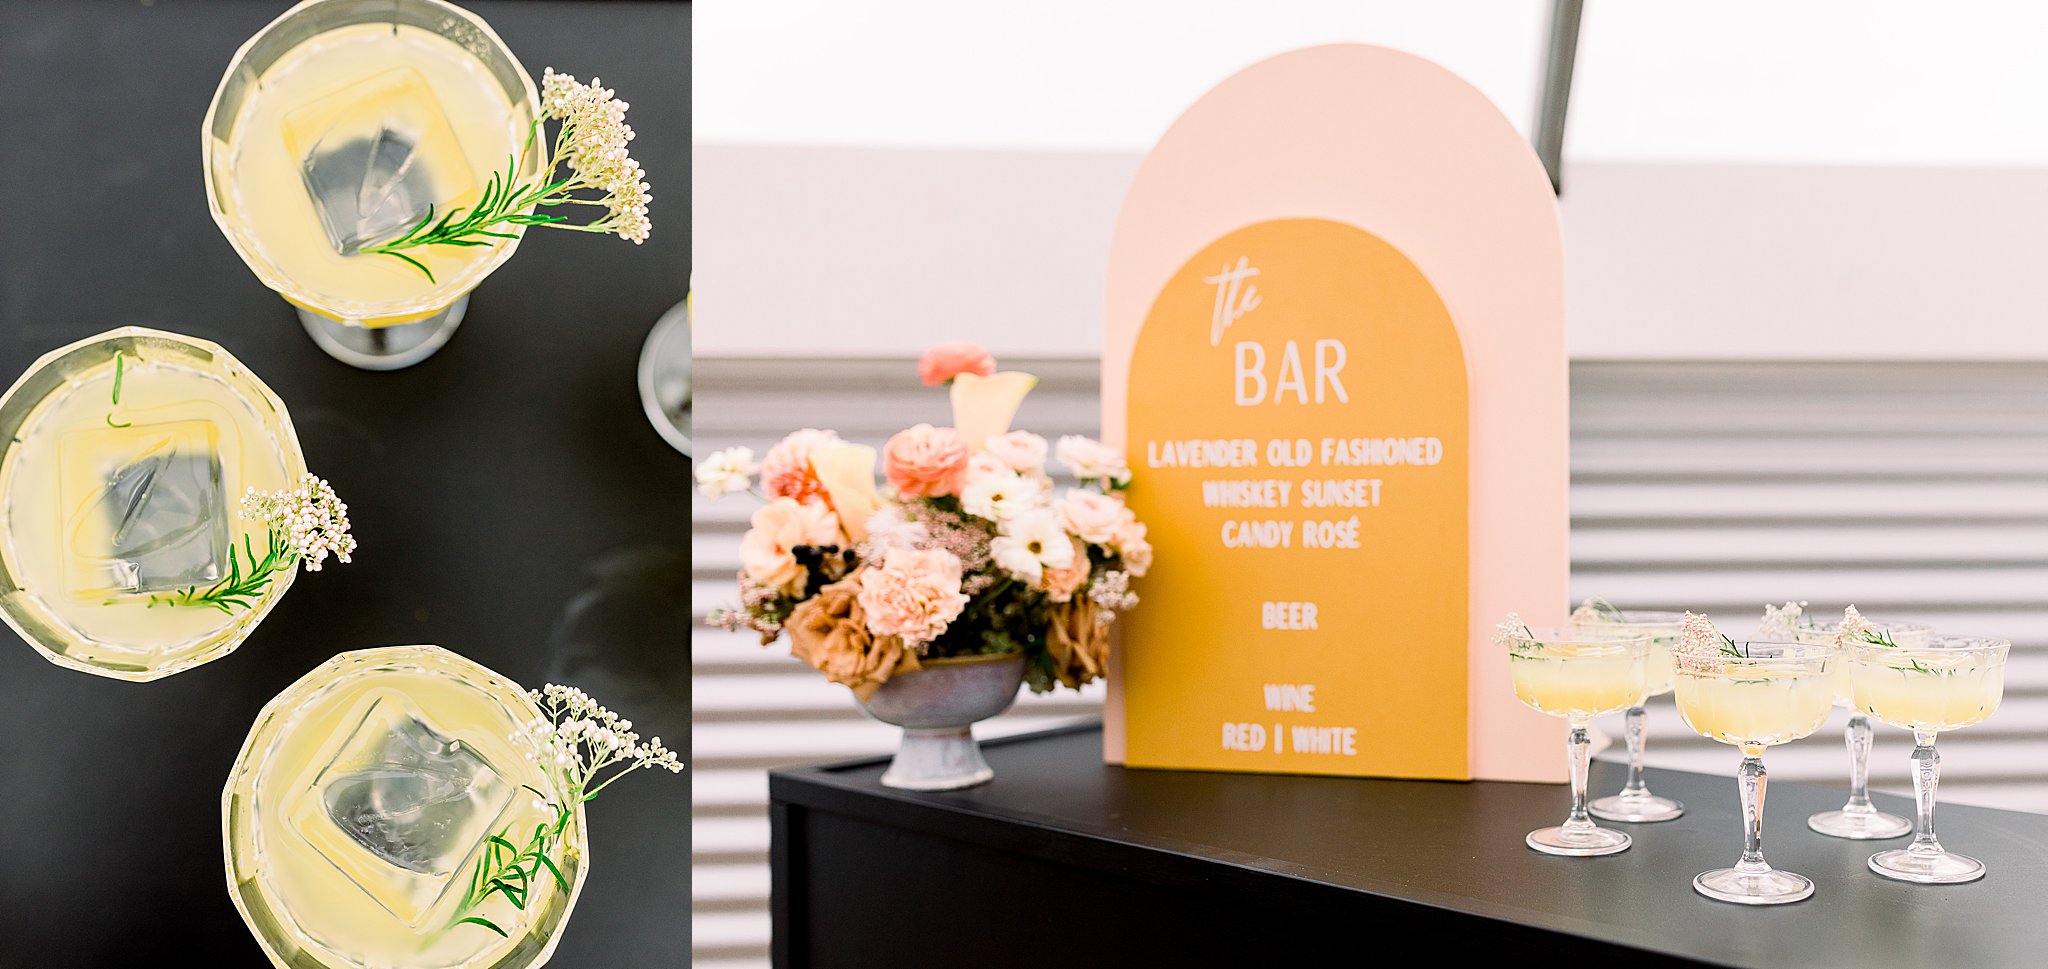 Wedding bar menu inspiration, lavender old fashioned, whiskey sunset, candy rose